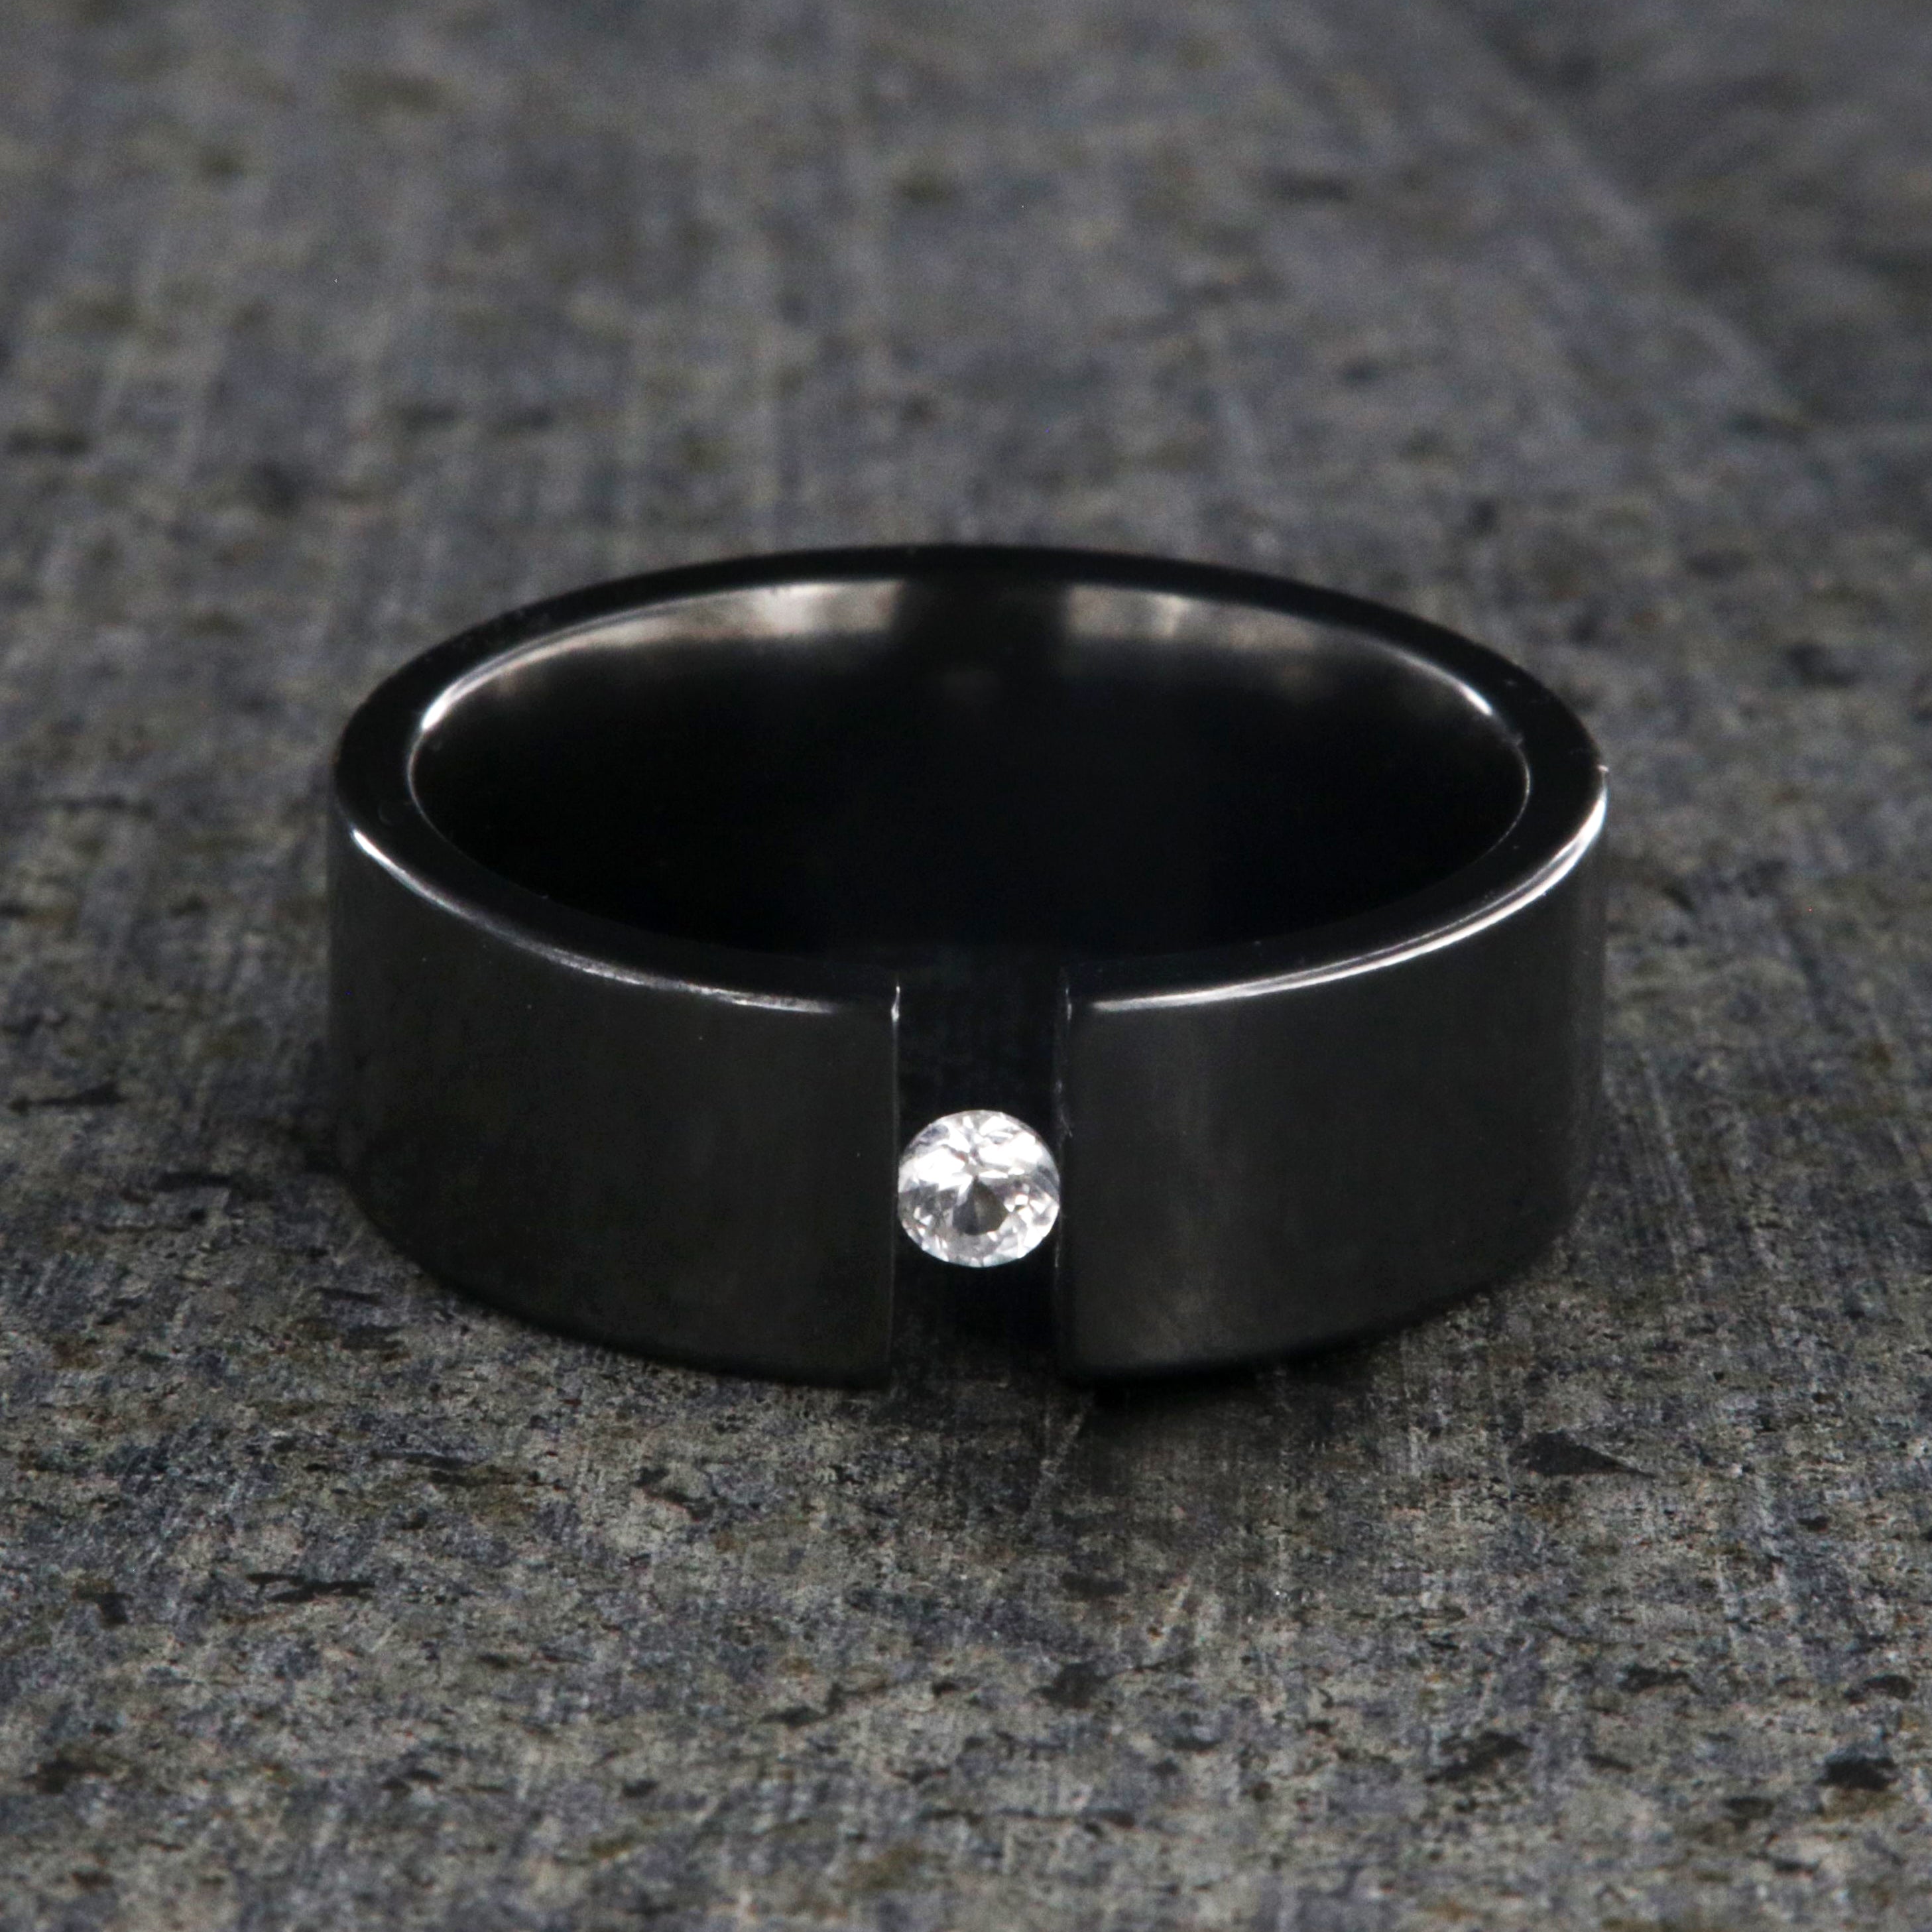 Tension Set Blue Sapphire in Black Zirconium Engagement Ring